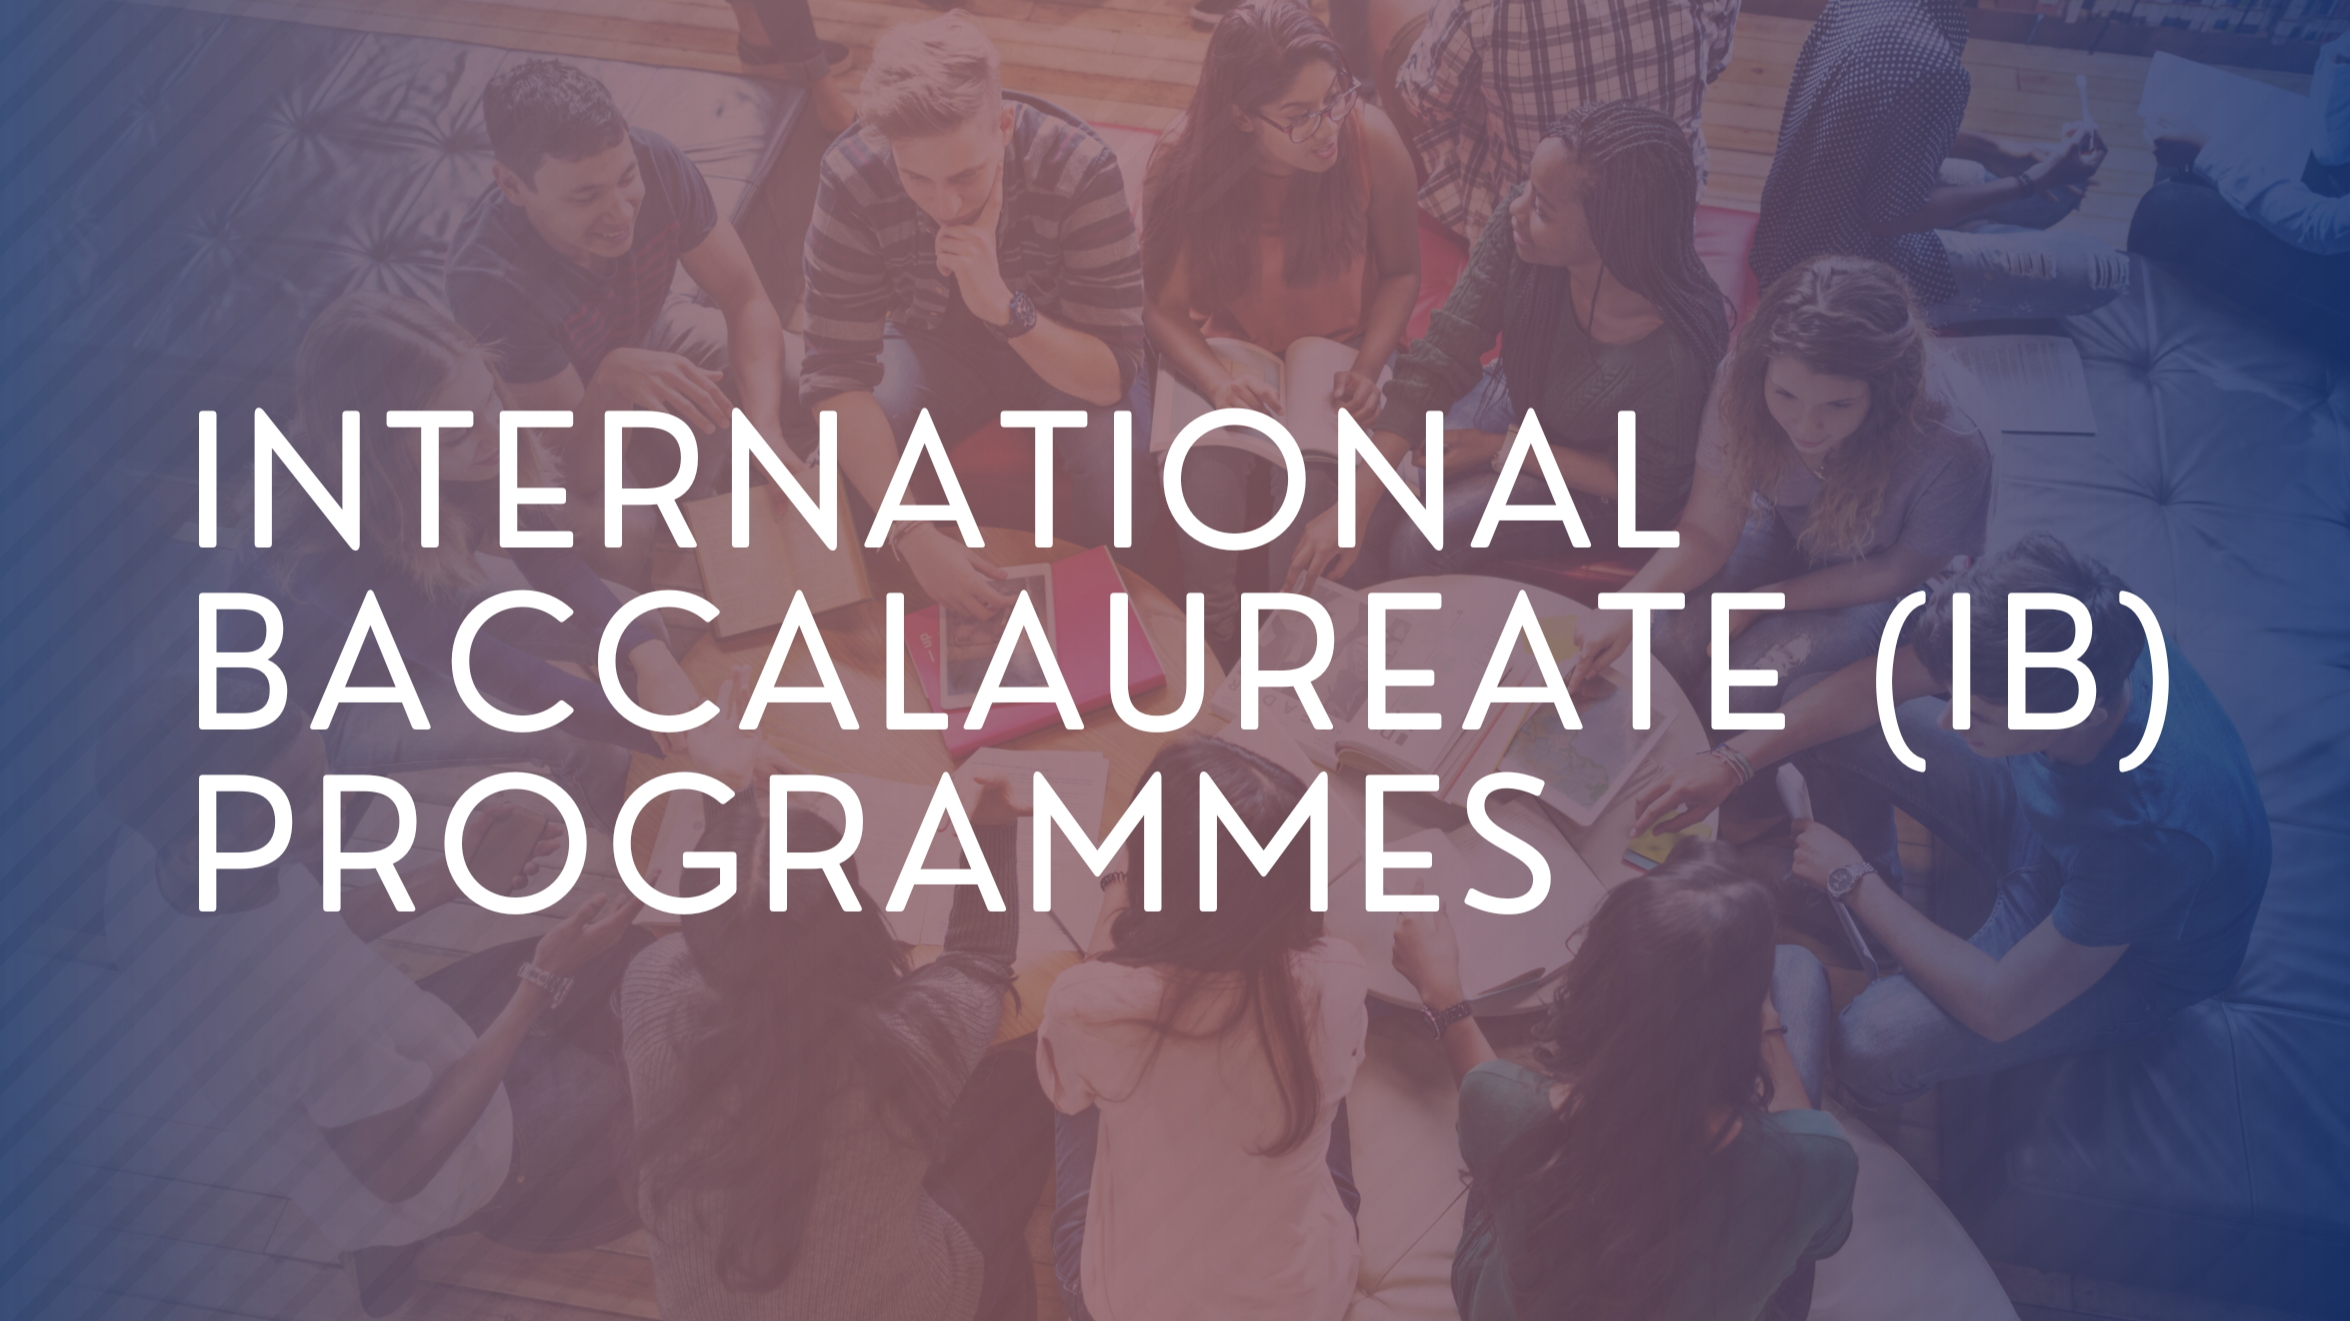 international baccalaureate program